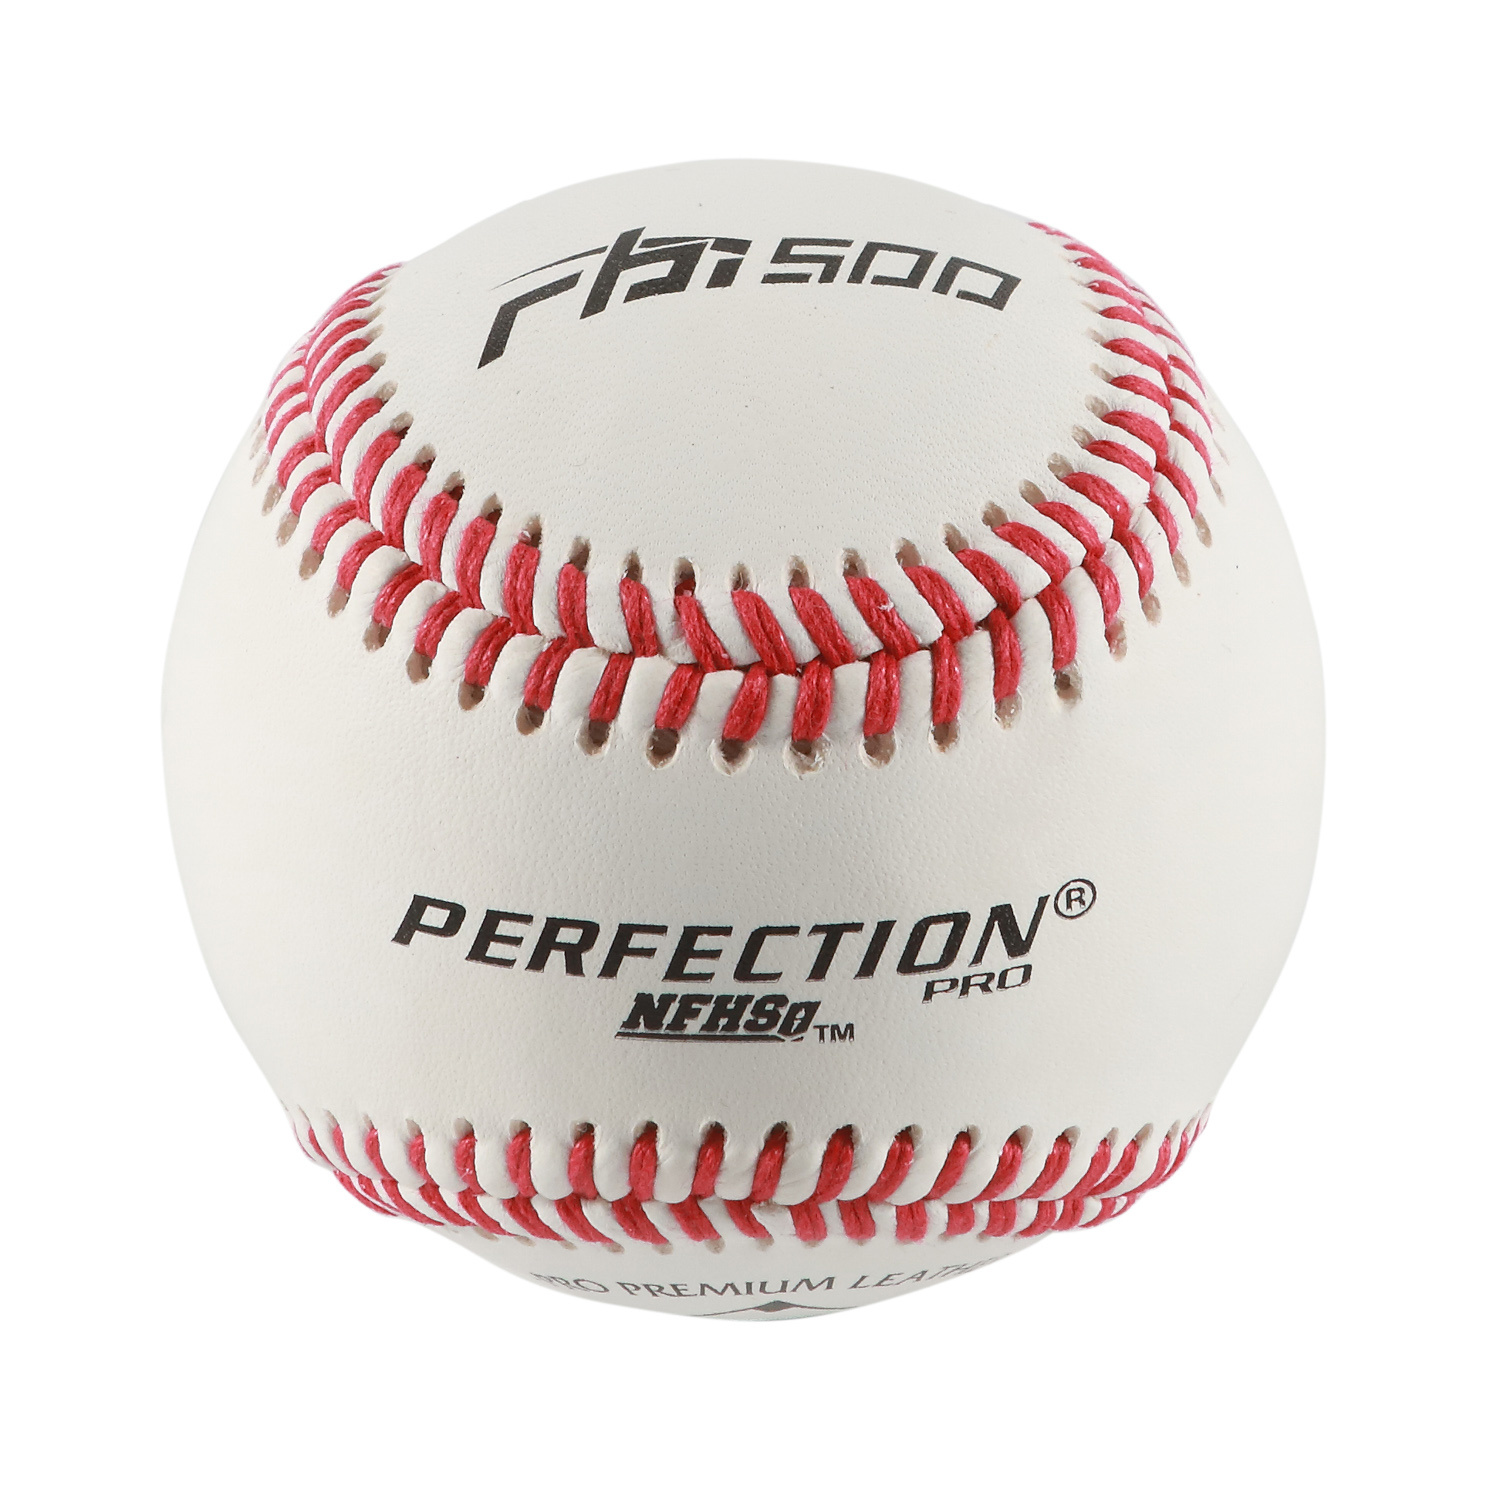 9 "Yellow Dimple Training Pitching Machine Baseball Fabrik Direktverkauf Softball Ball